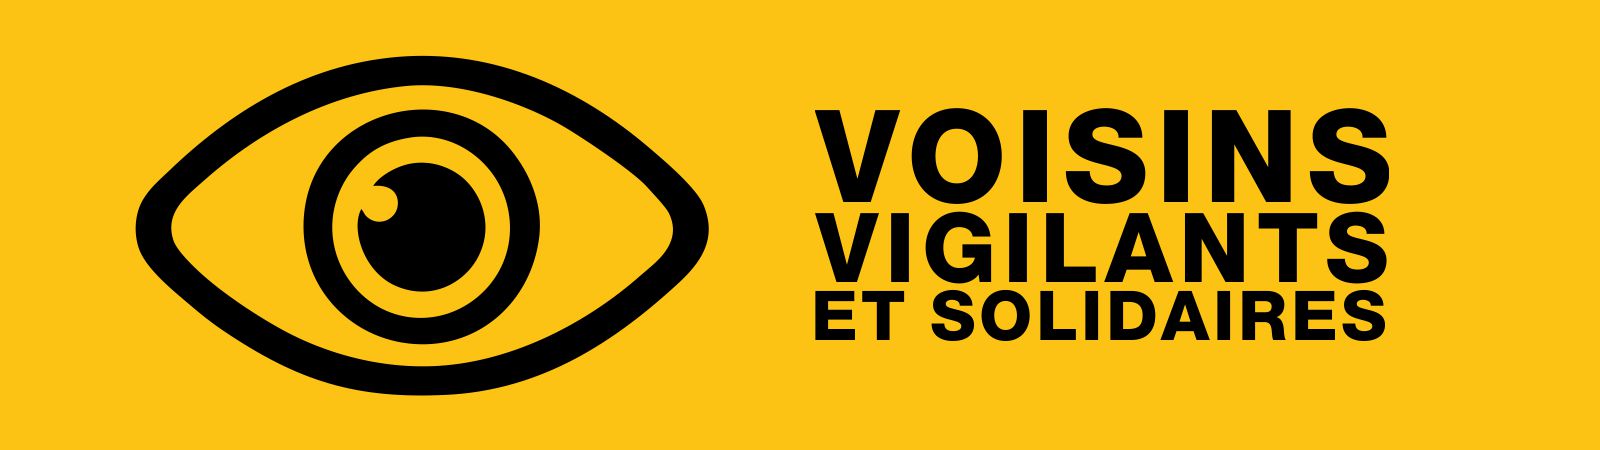 voisins_vigilants_solidaires_logo.jpg